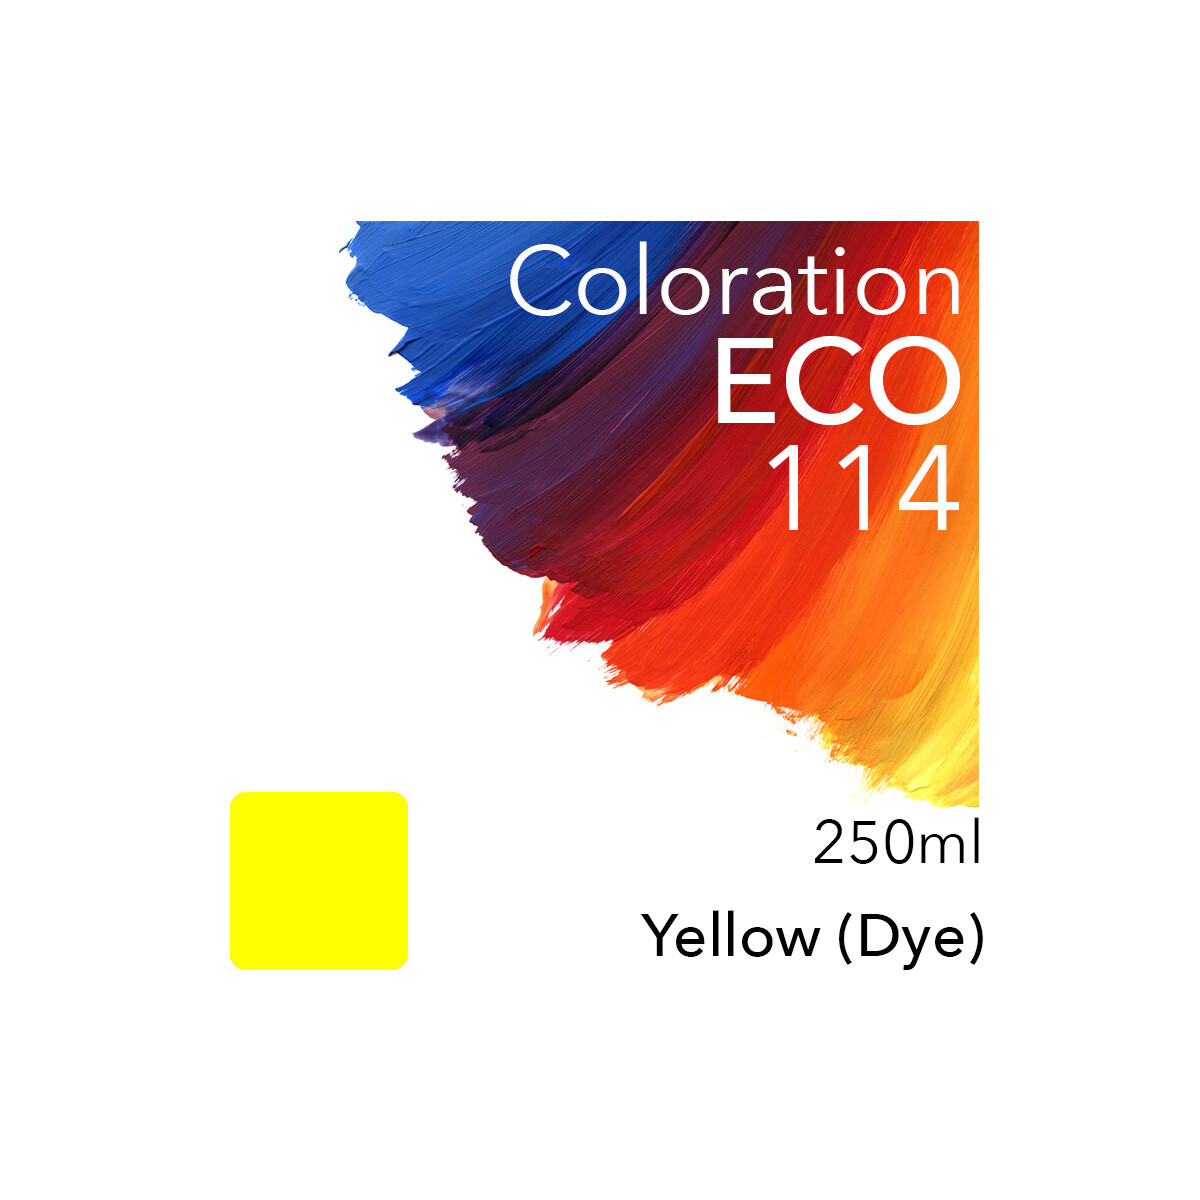 Coloration ECO kompatibel zu Epson 114 Y (Yellow) 250ml